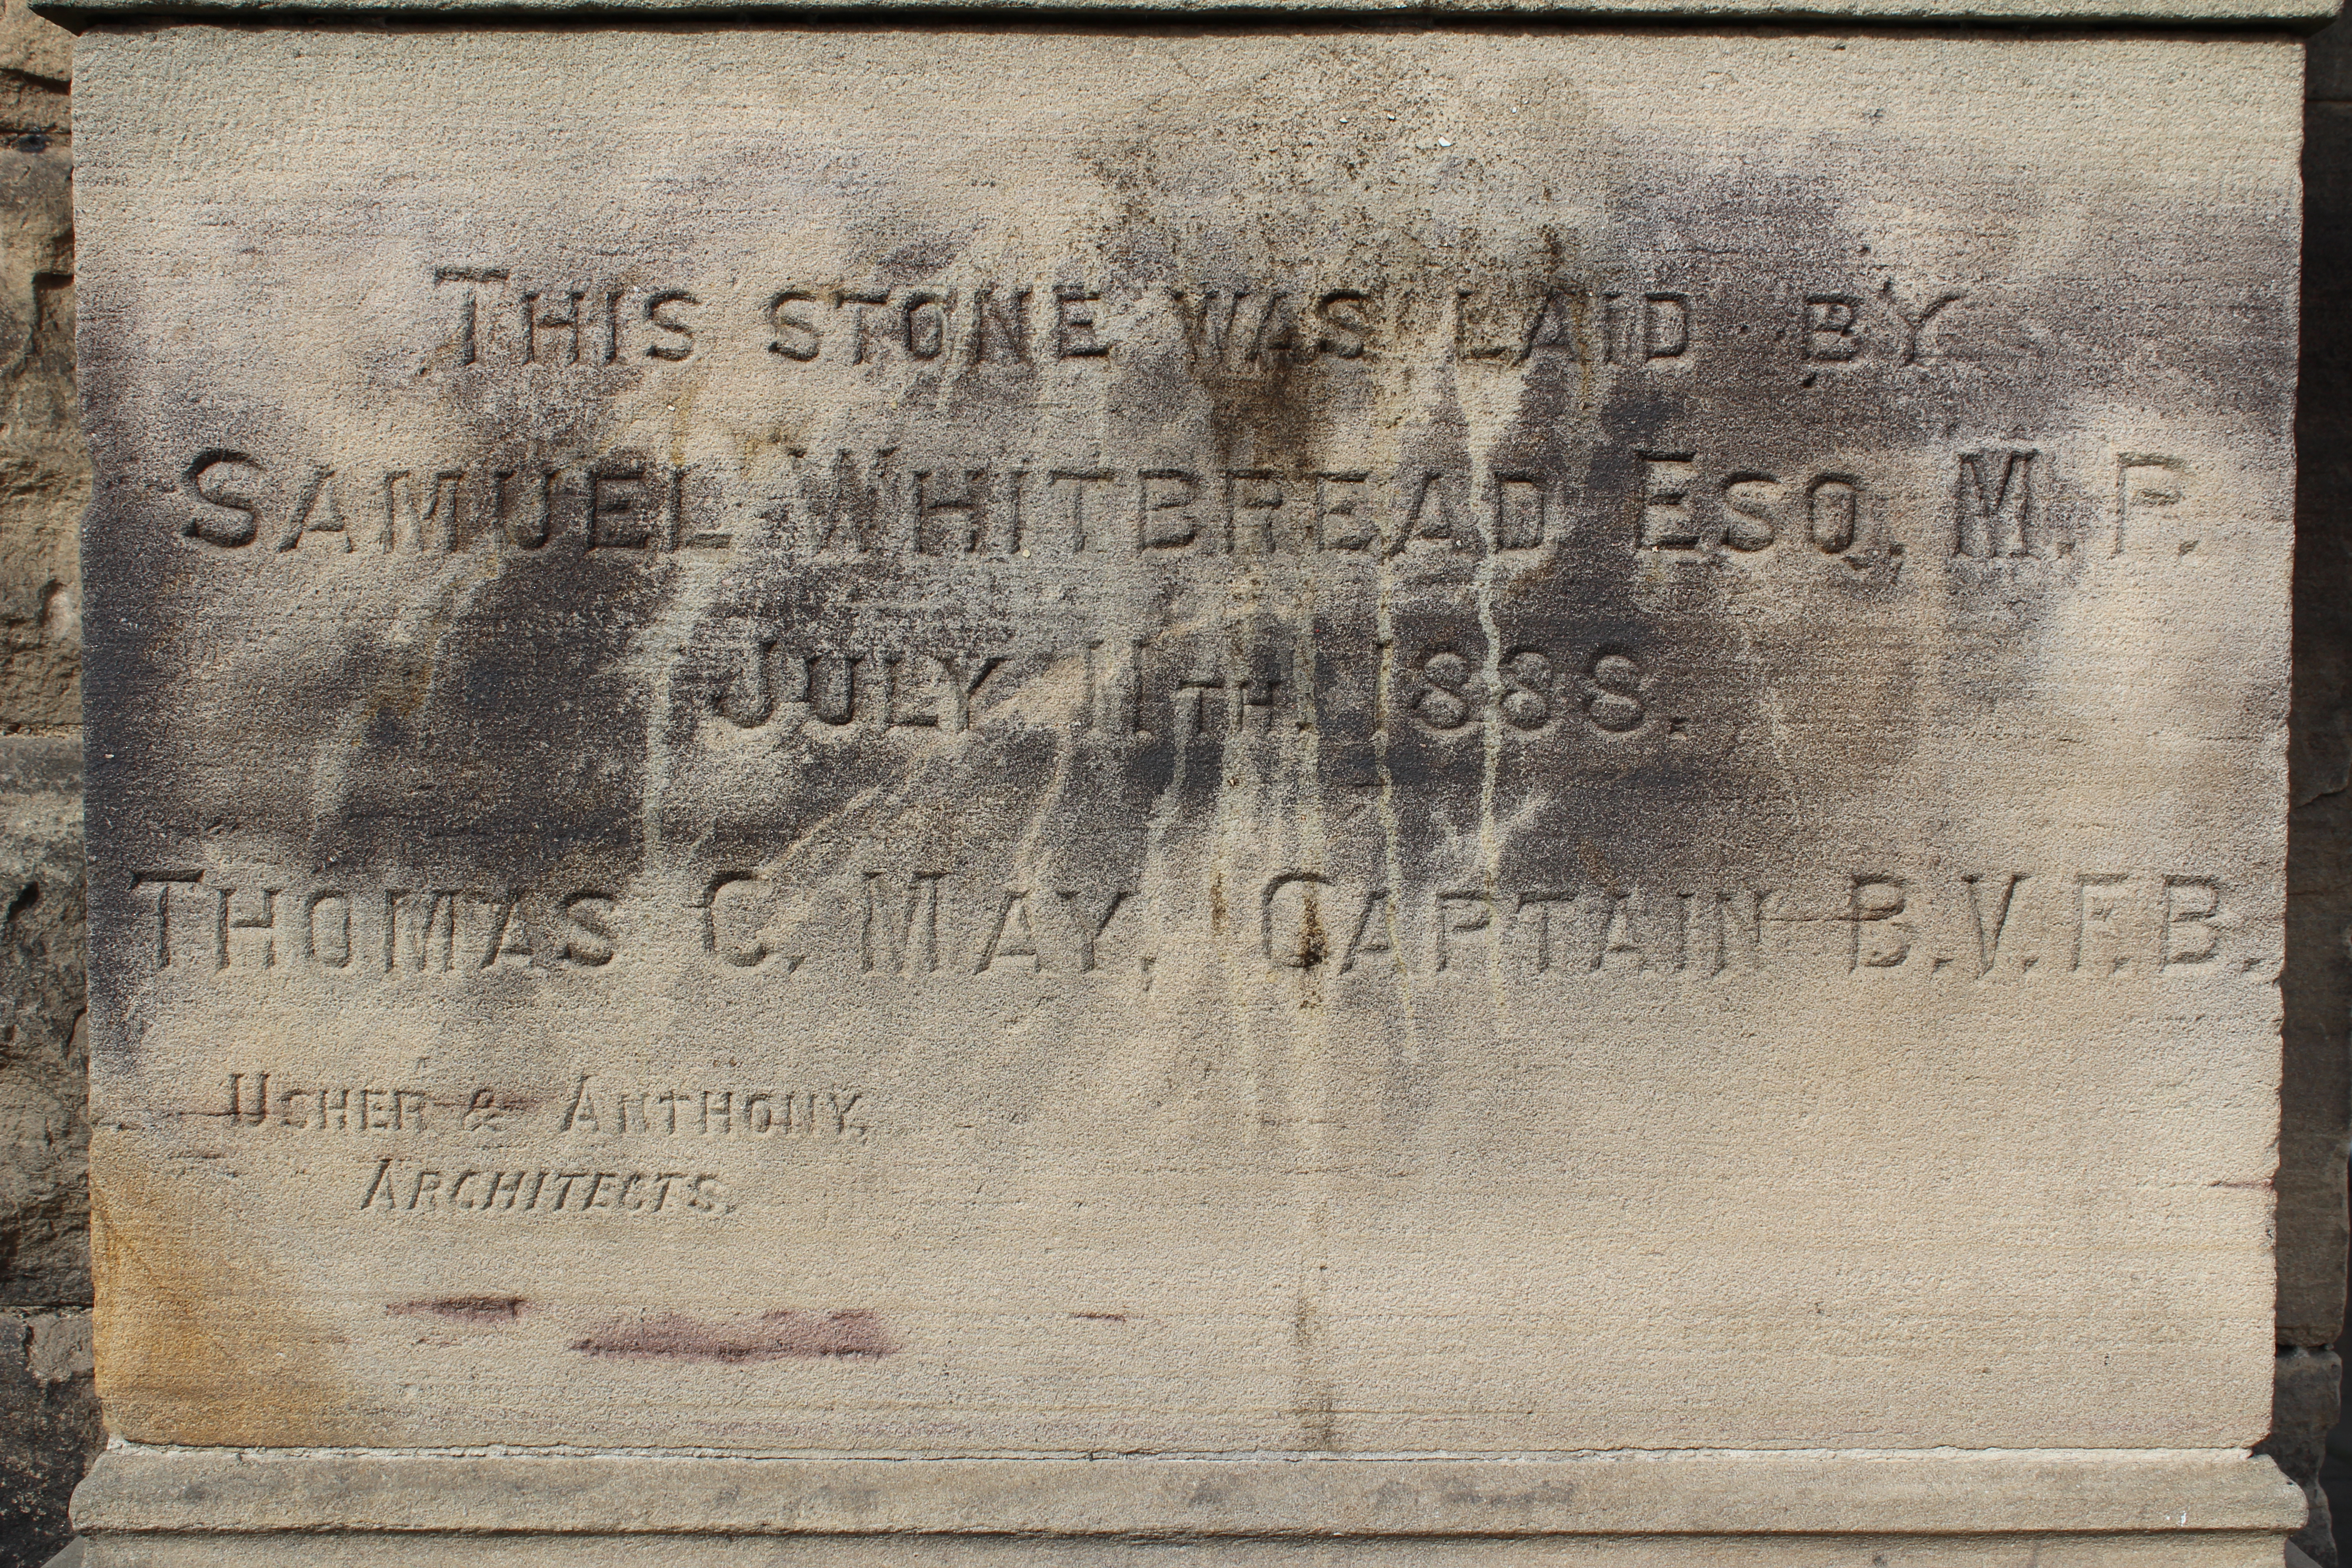 Fire Station foundation stone commemorative plaque